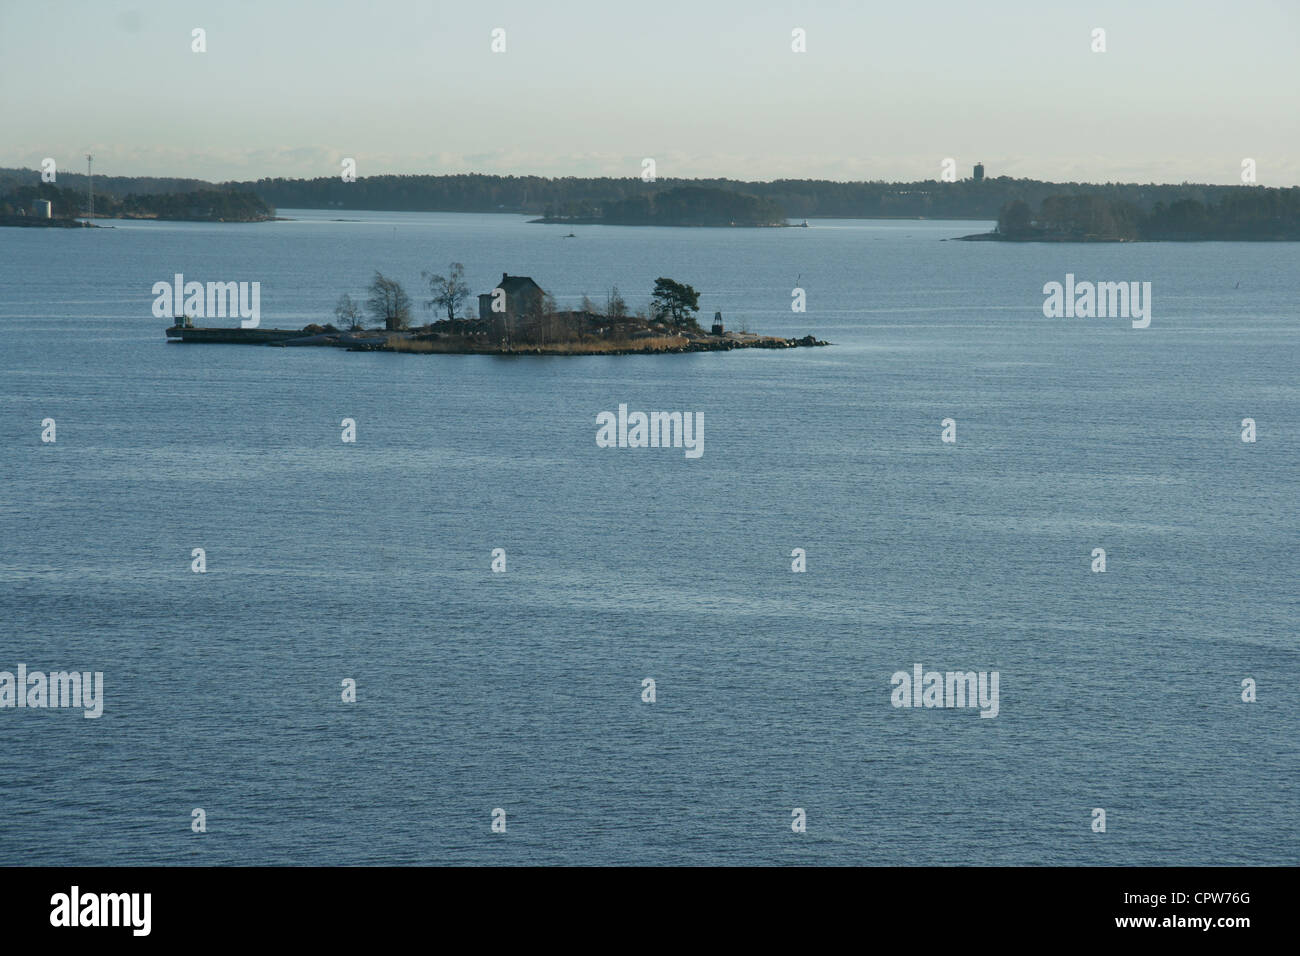 Island off coast of Helsinki, Finland. Stock Photo